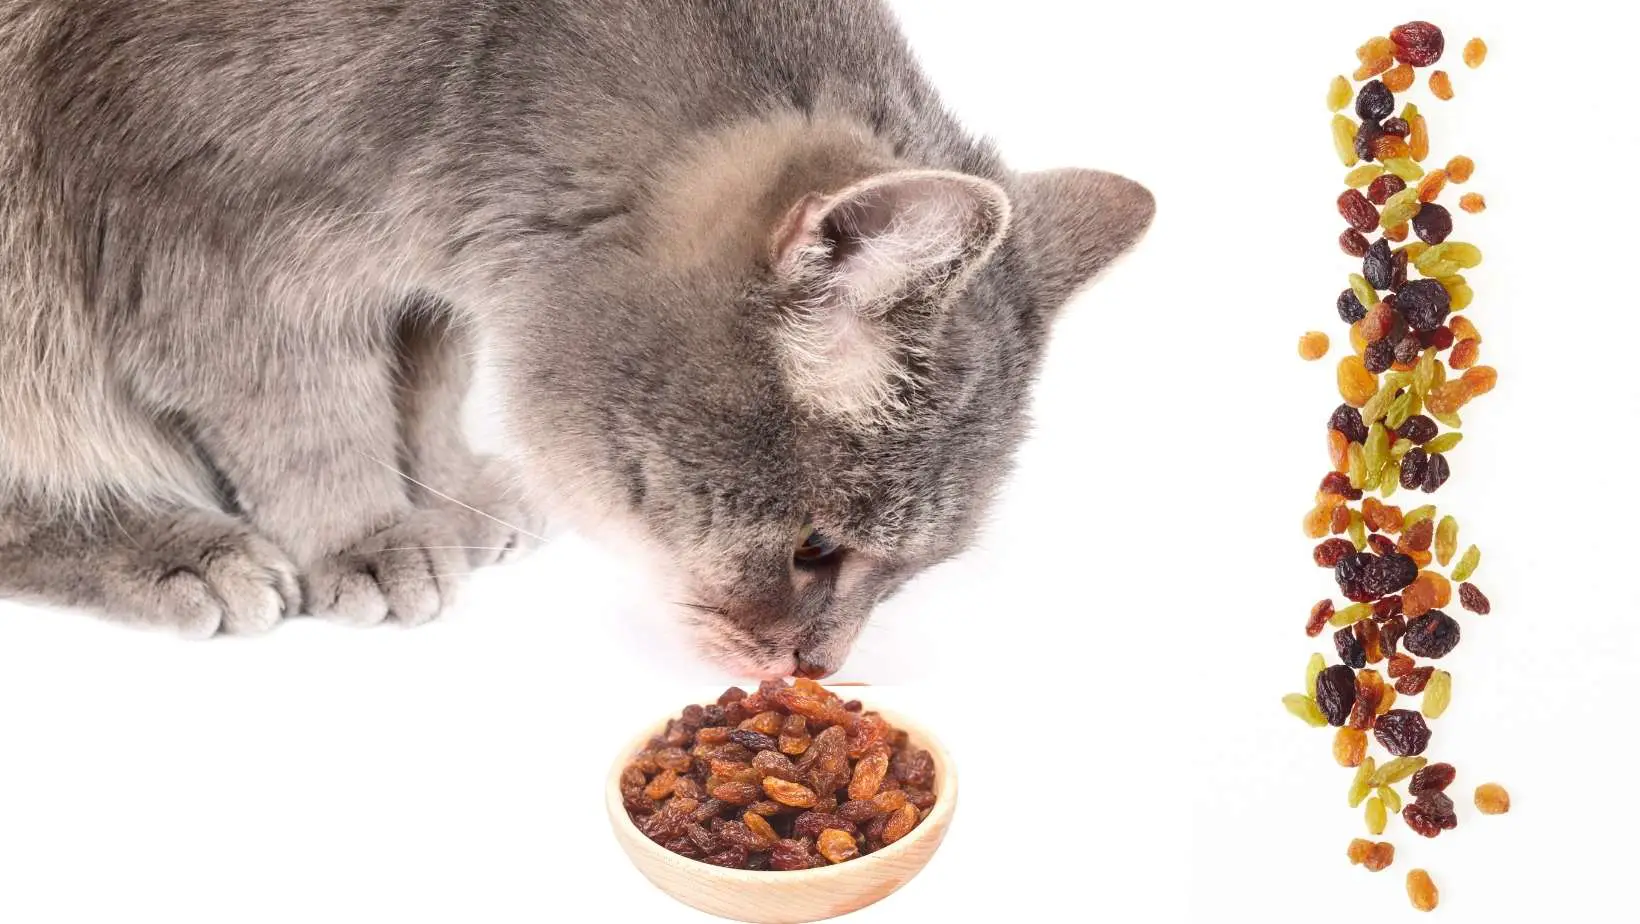 Can Cats Eat Raisins?